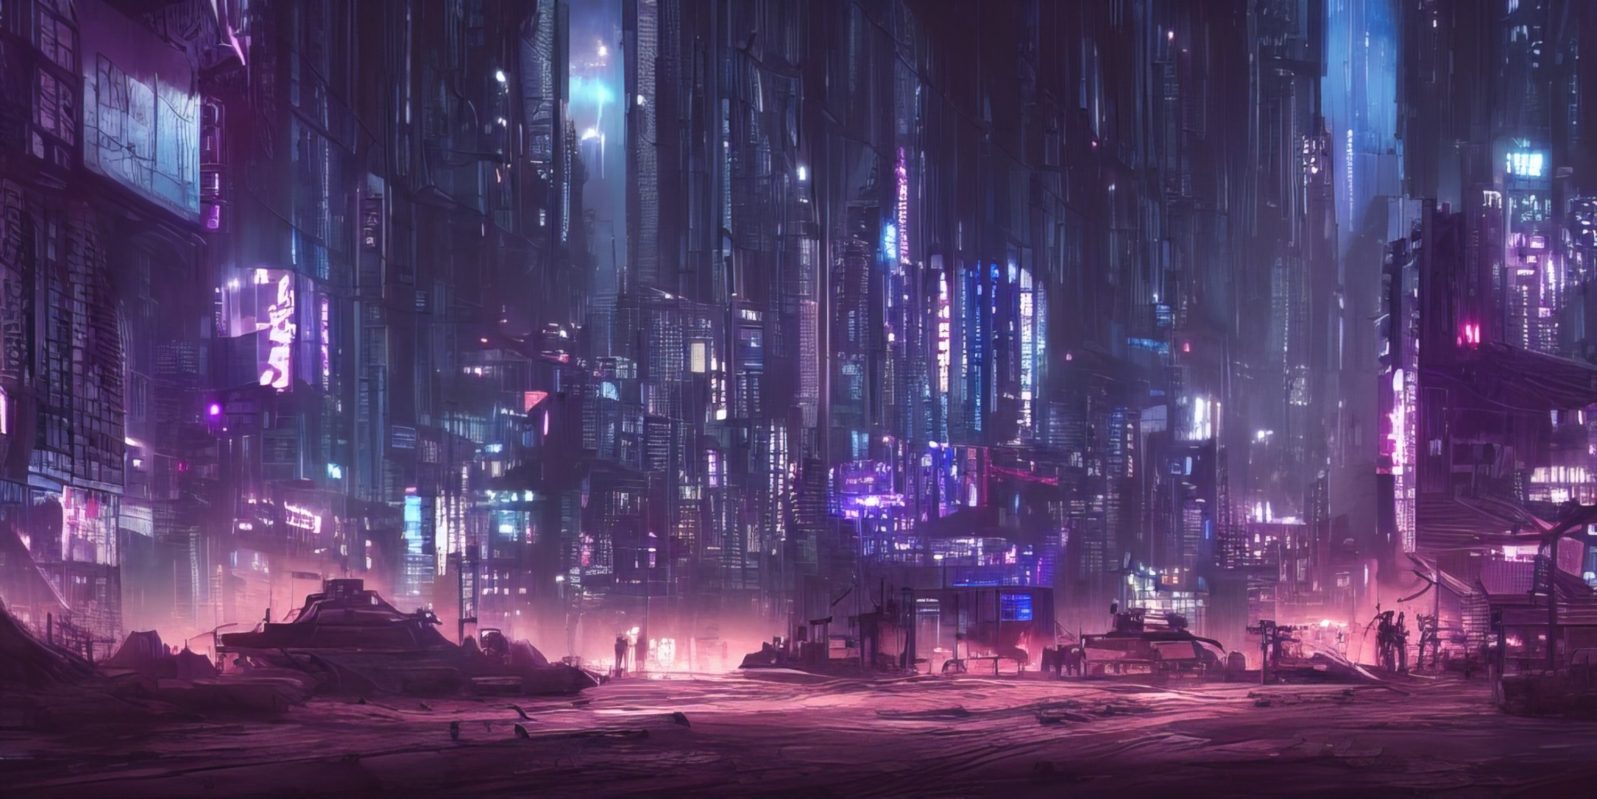 Dystopian futuristic cyberpunk city at night in a neon haze. Blue and purple glowing neon lights. Urban wallpaper. 3D illustration.